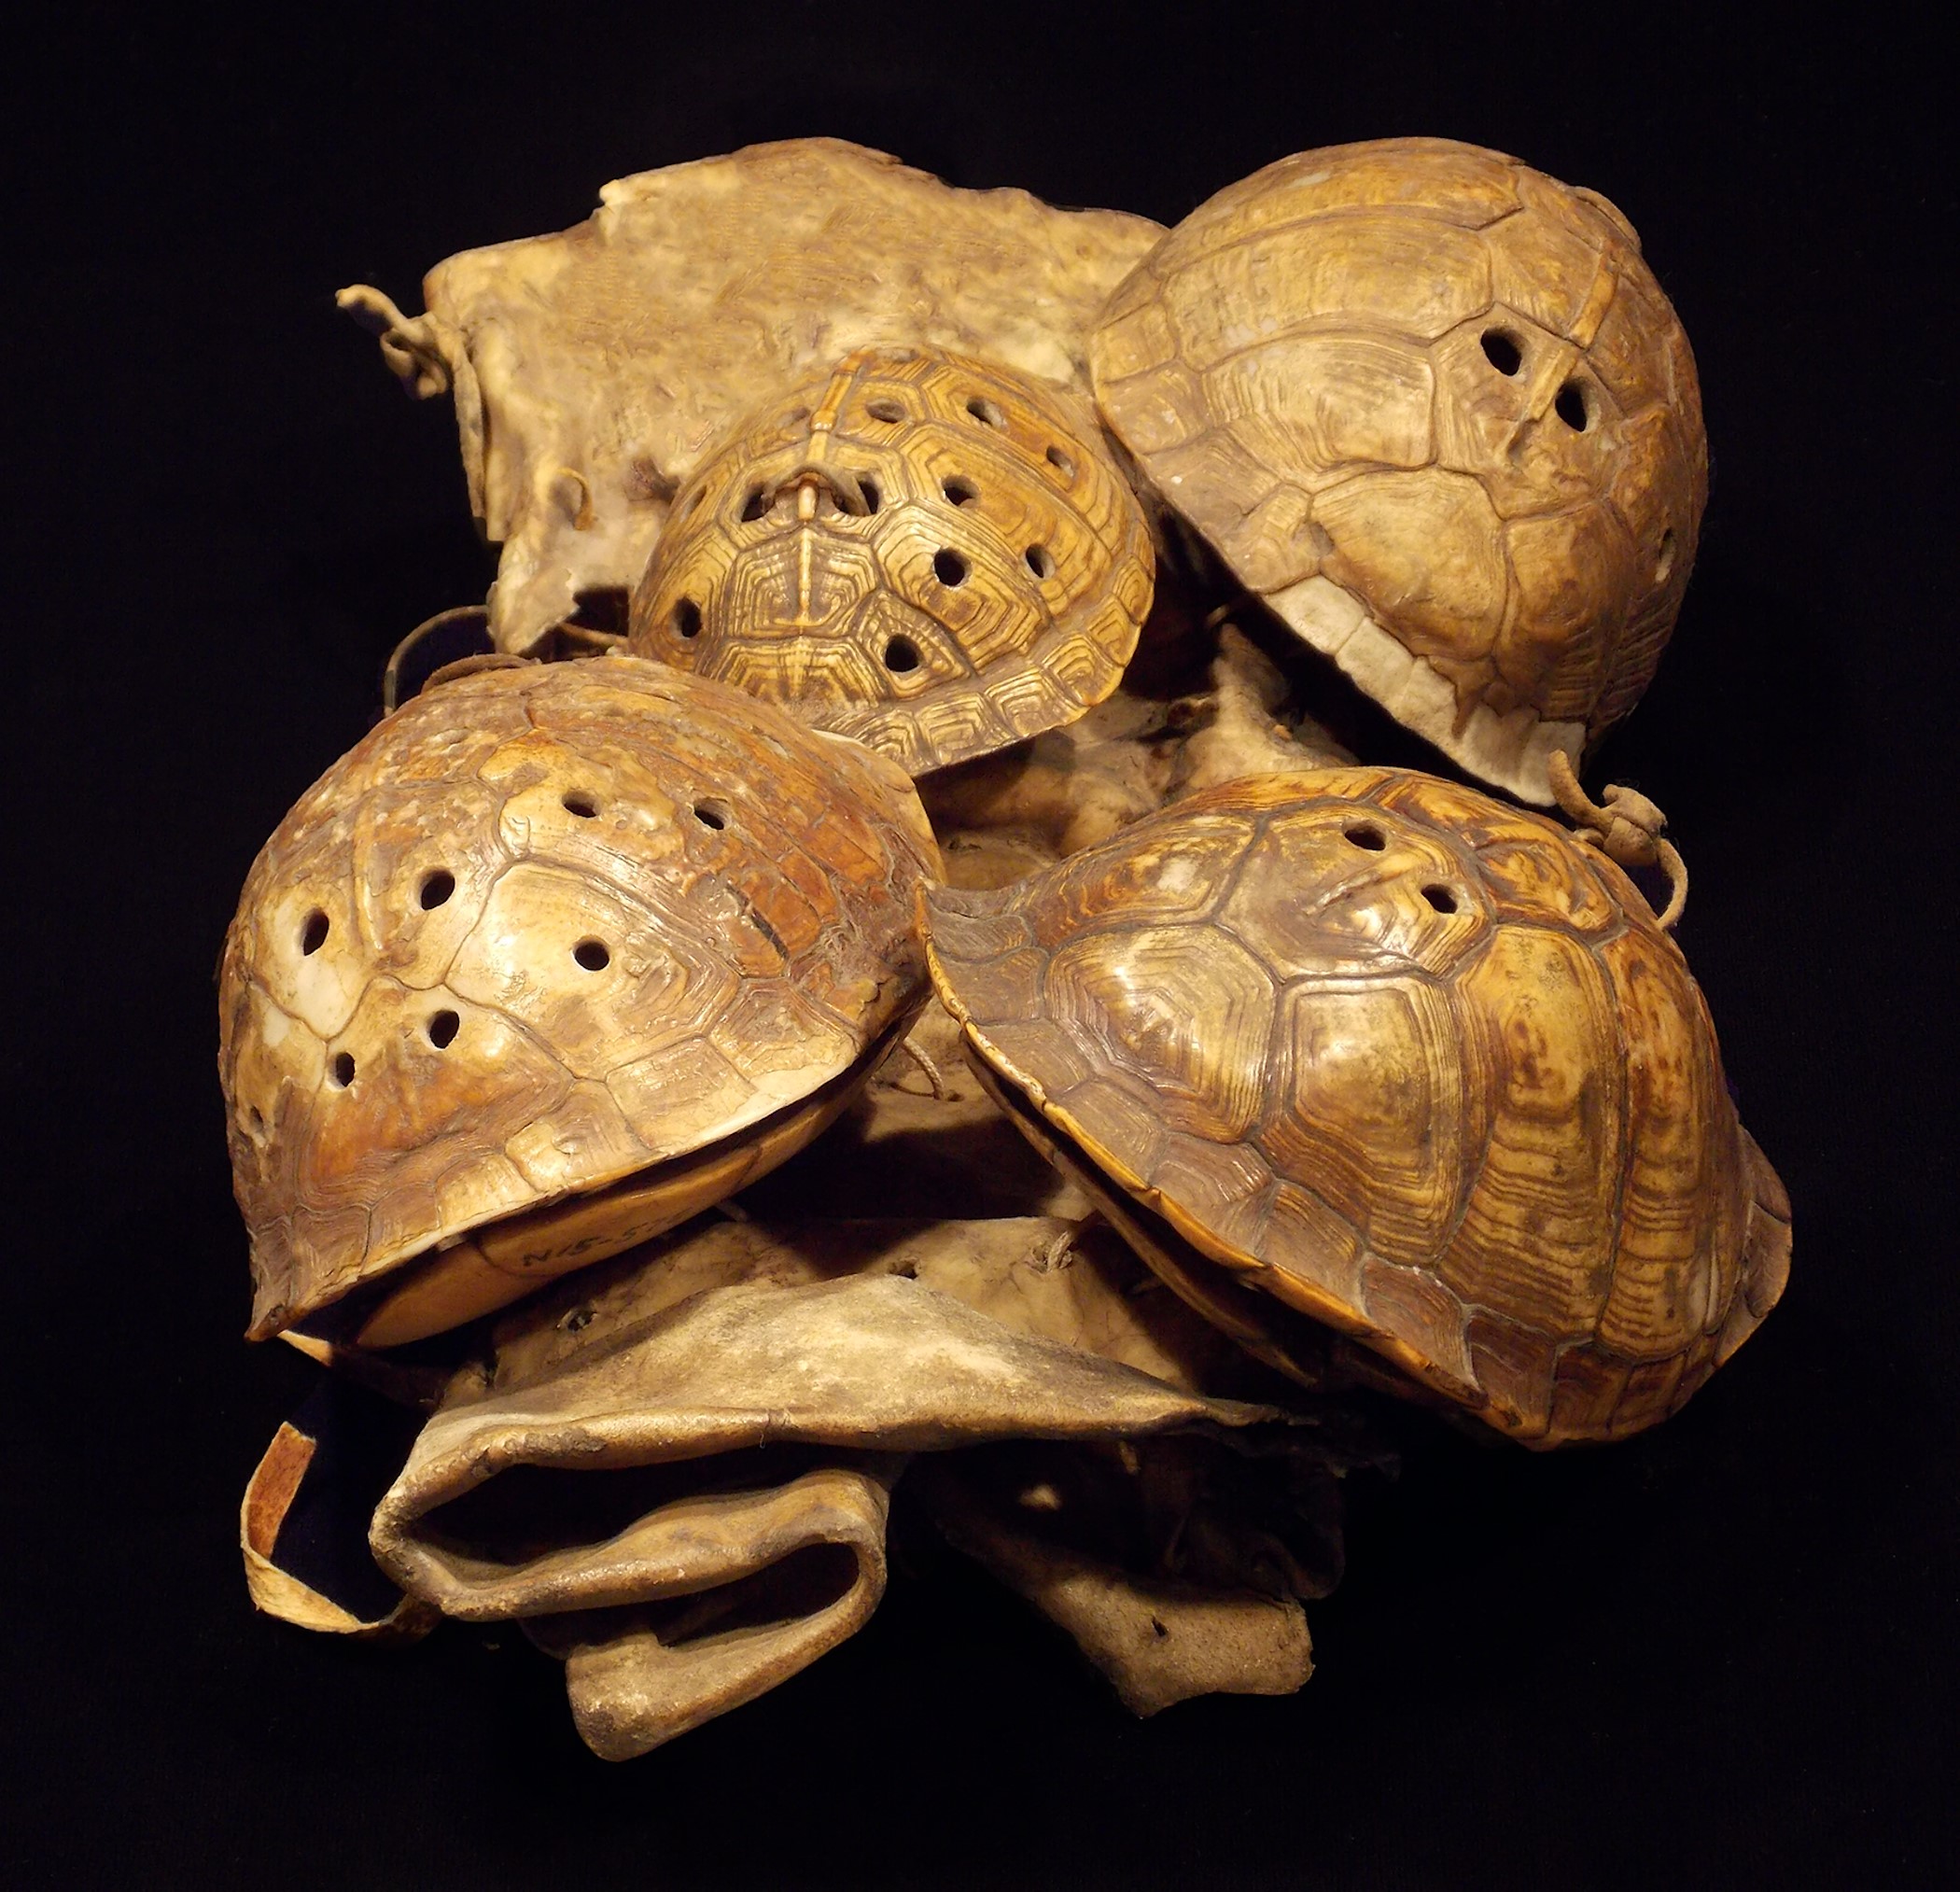 Turtle shell. Черепаховый панцирь. Панцири древних черепах. Панцирь черепахи. Ископаемые черепахи.